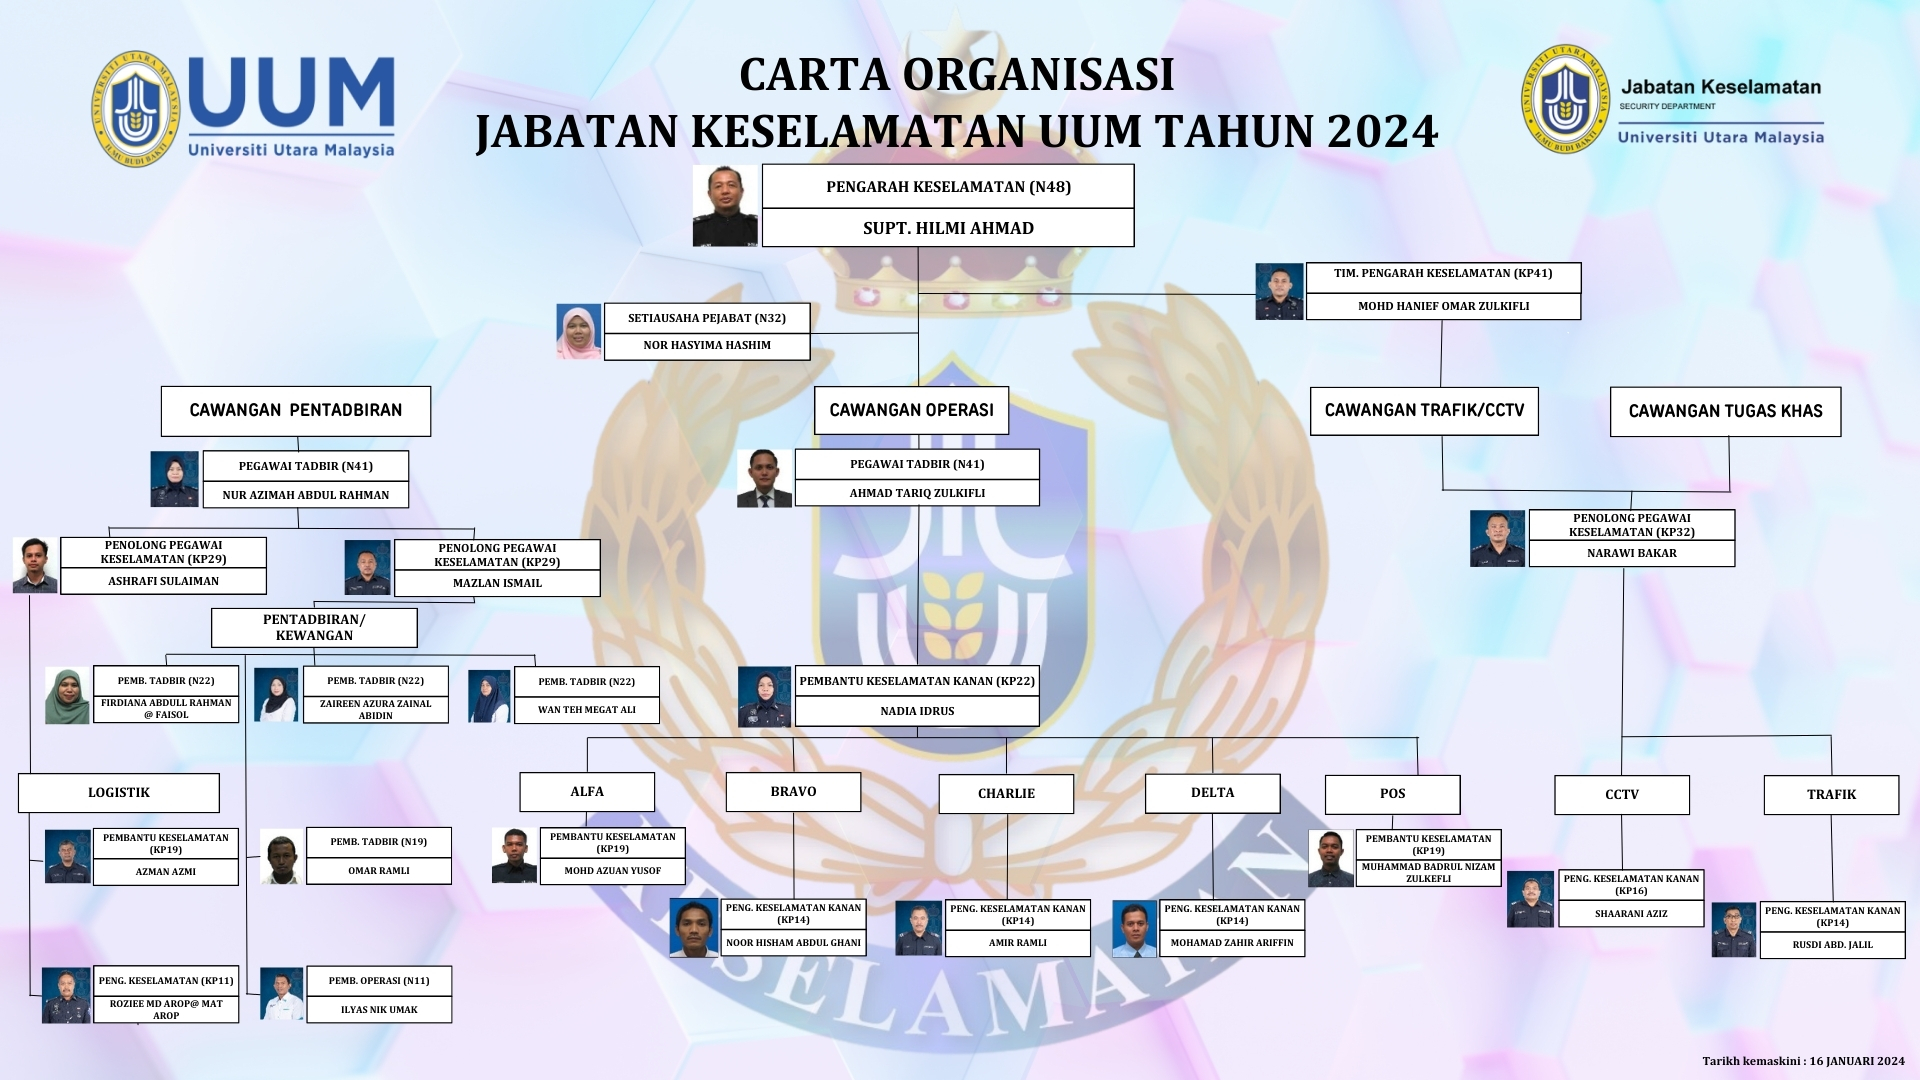 carta-organisasi-2024-16.1.24.pptx